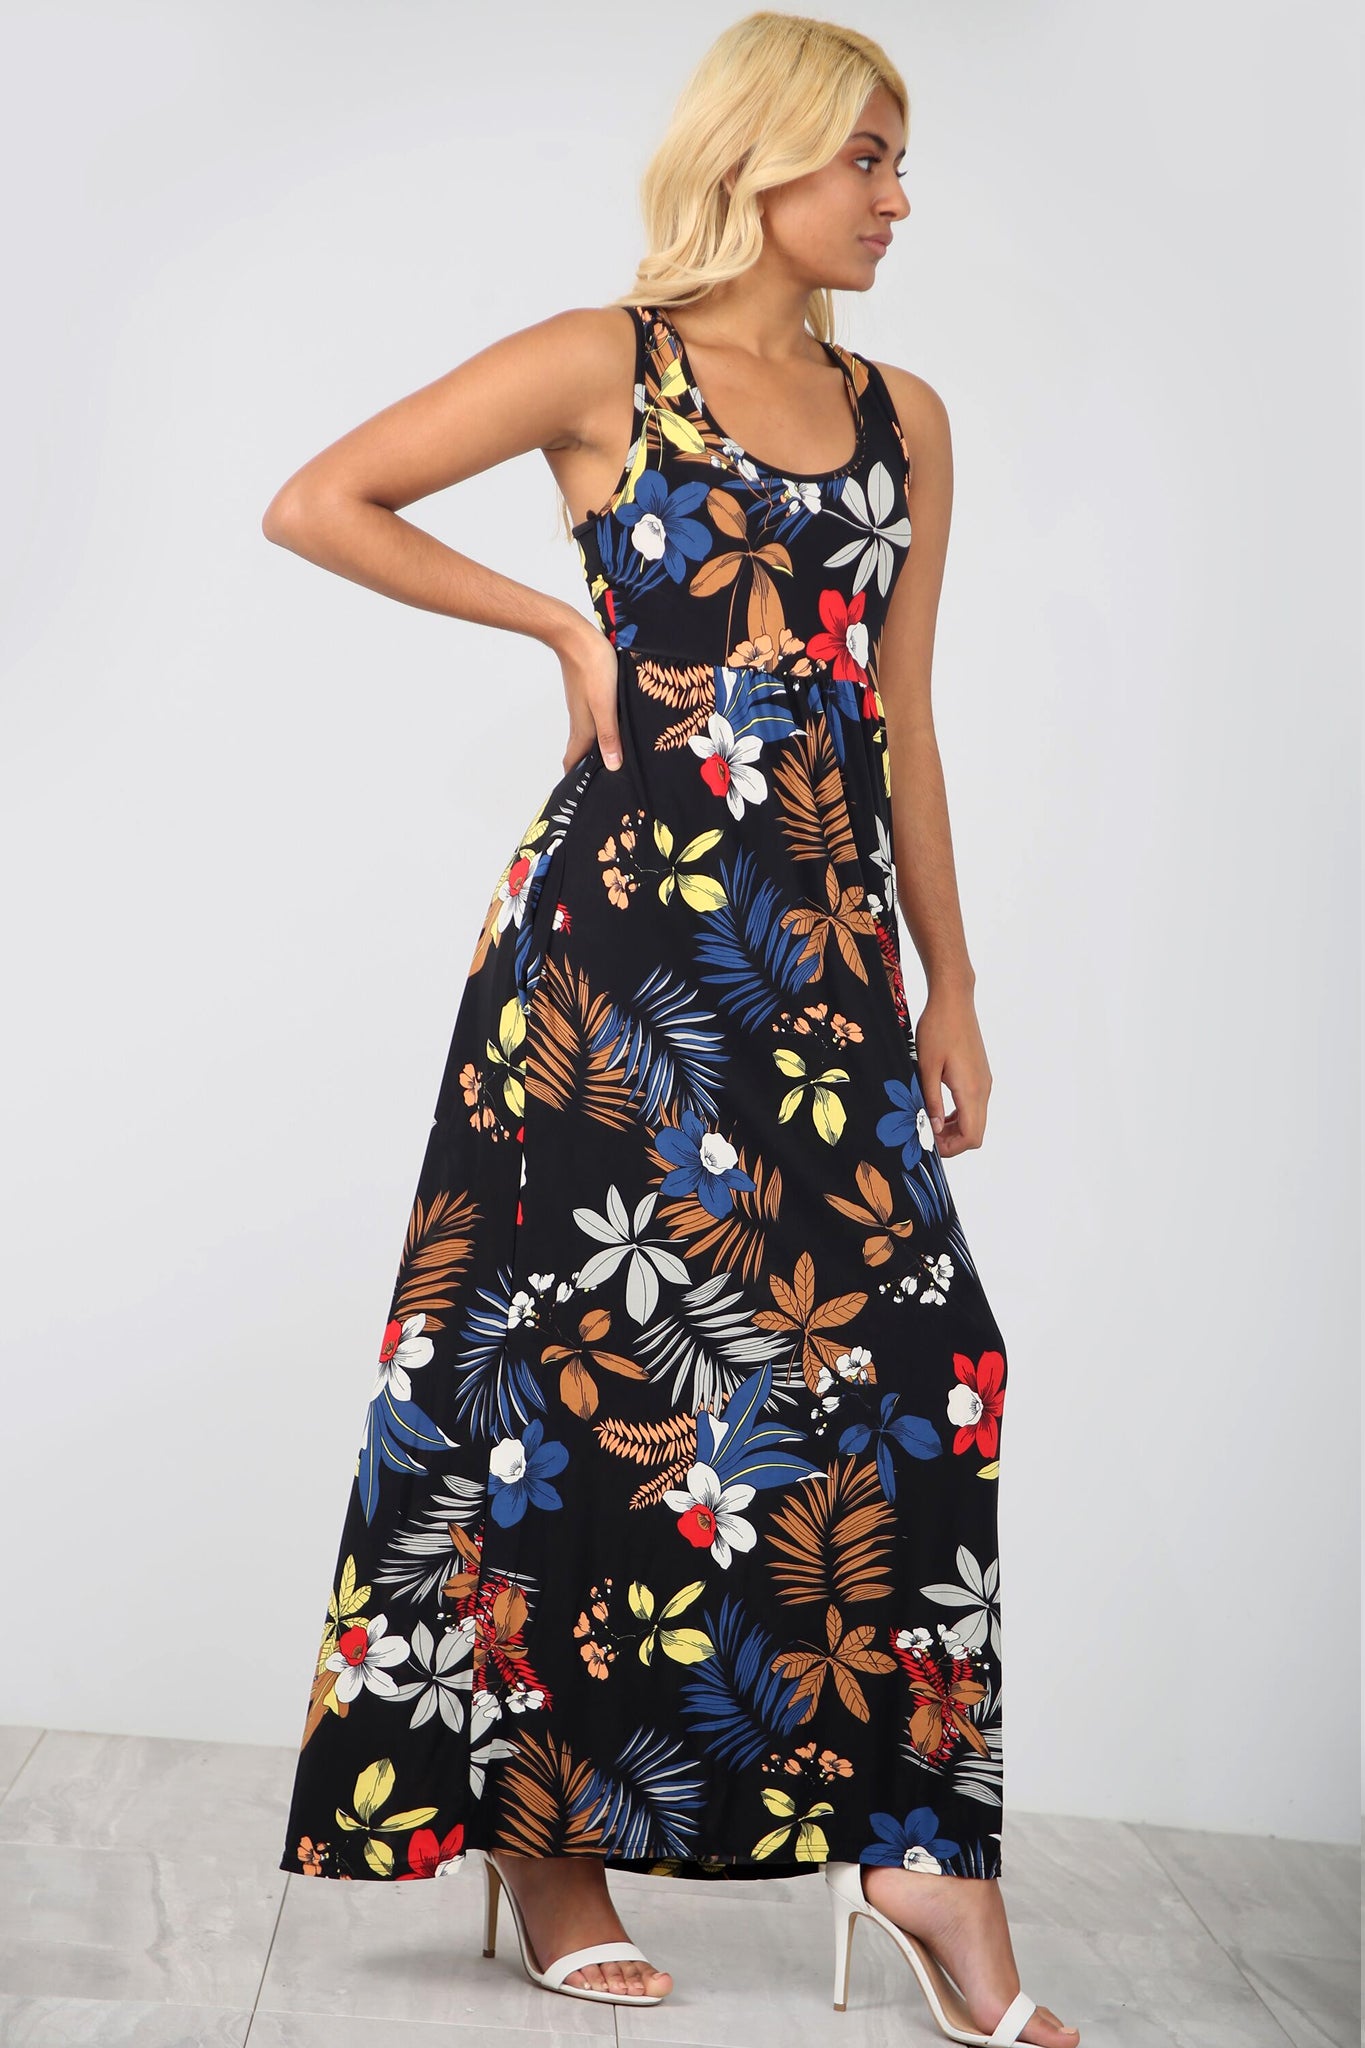 Racer Back Slinky Floral Maxi Dress With Pockets - bejealous-com